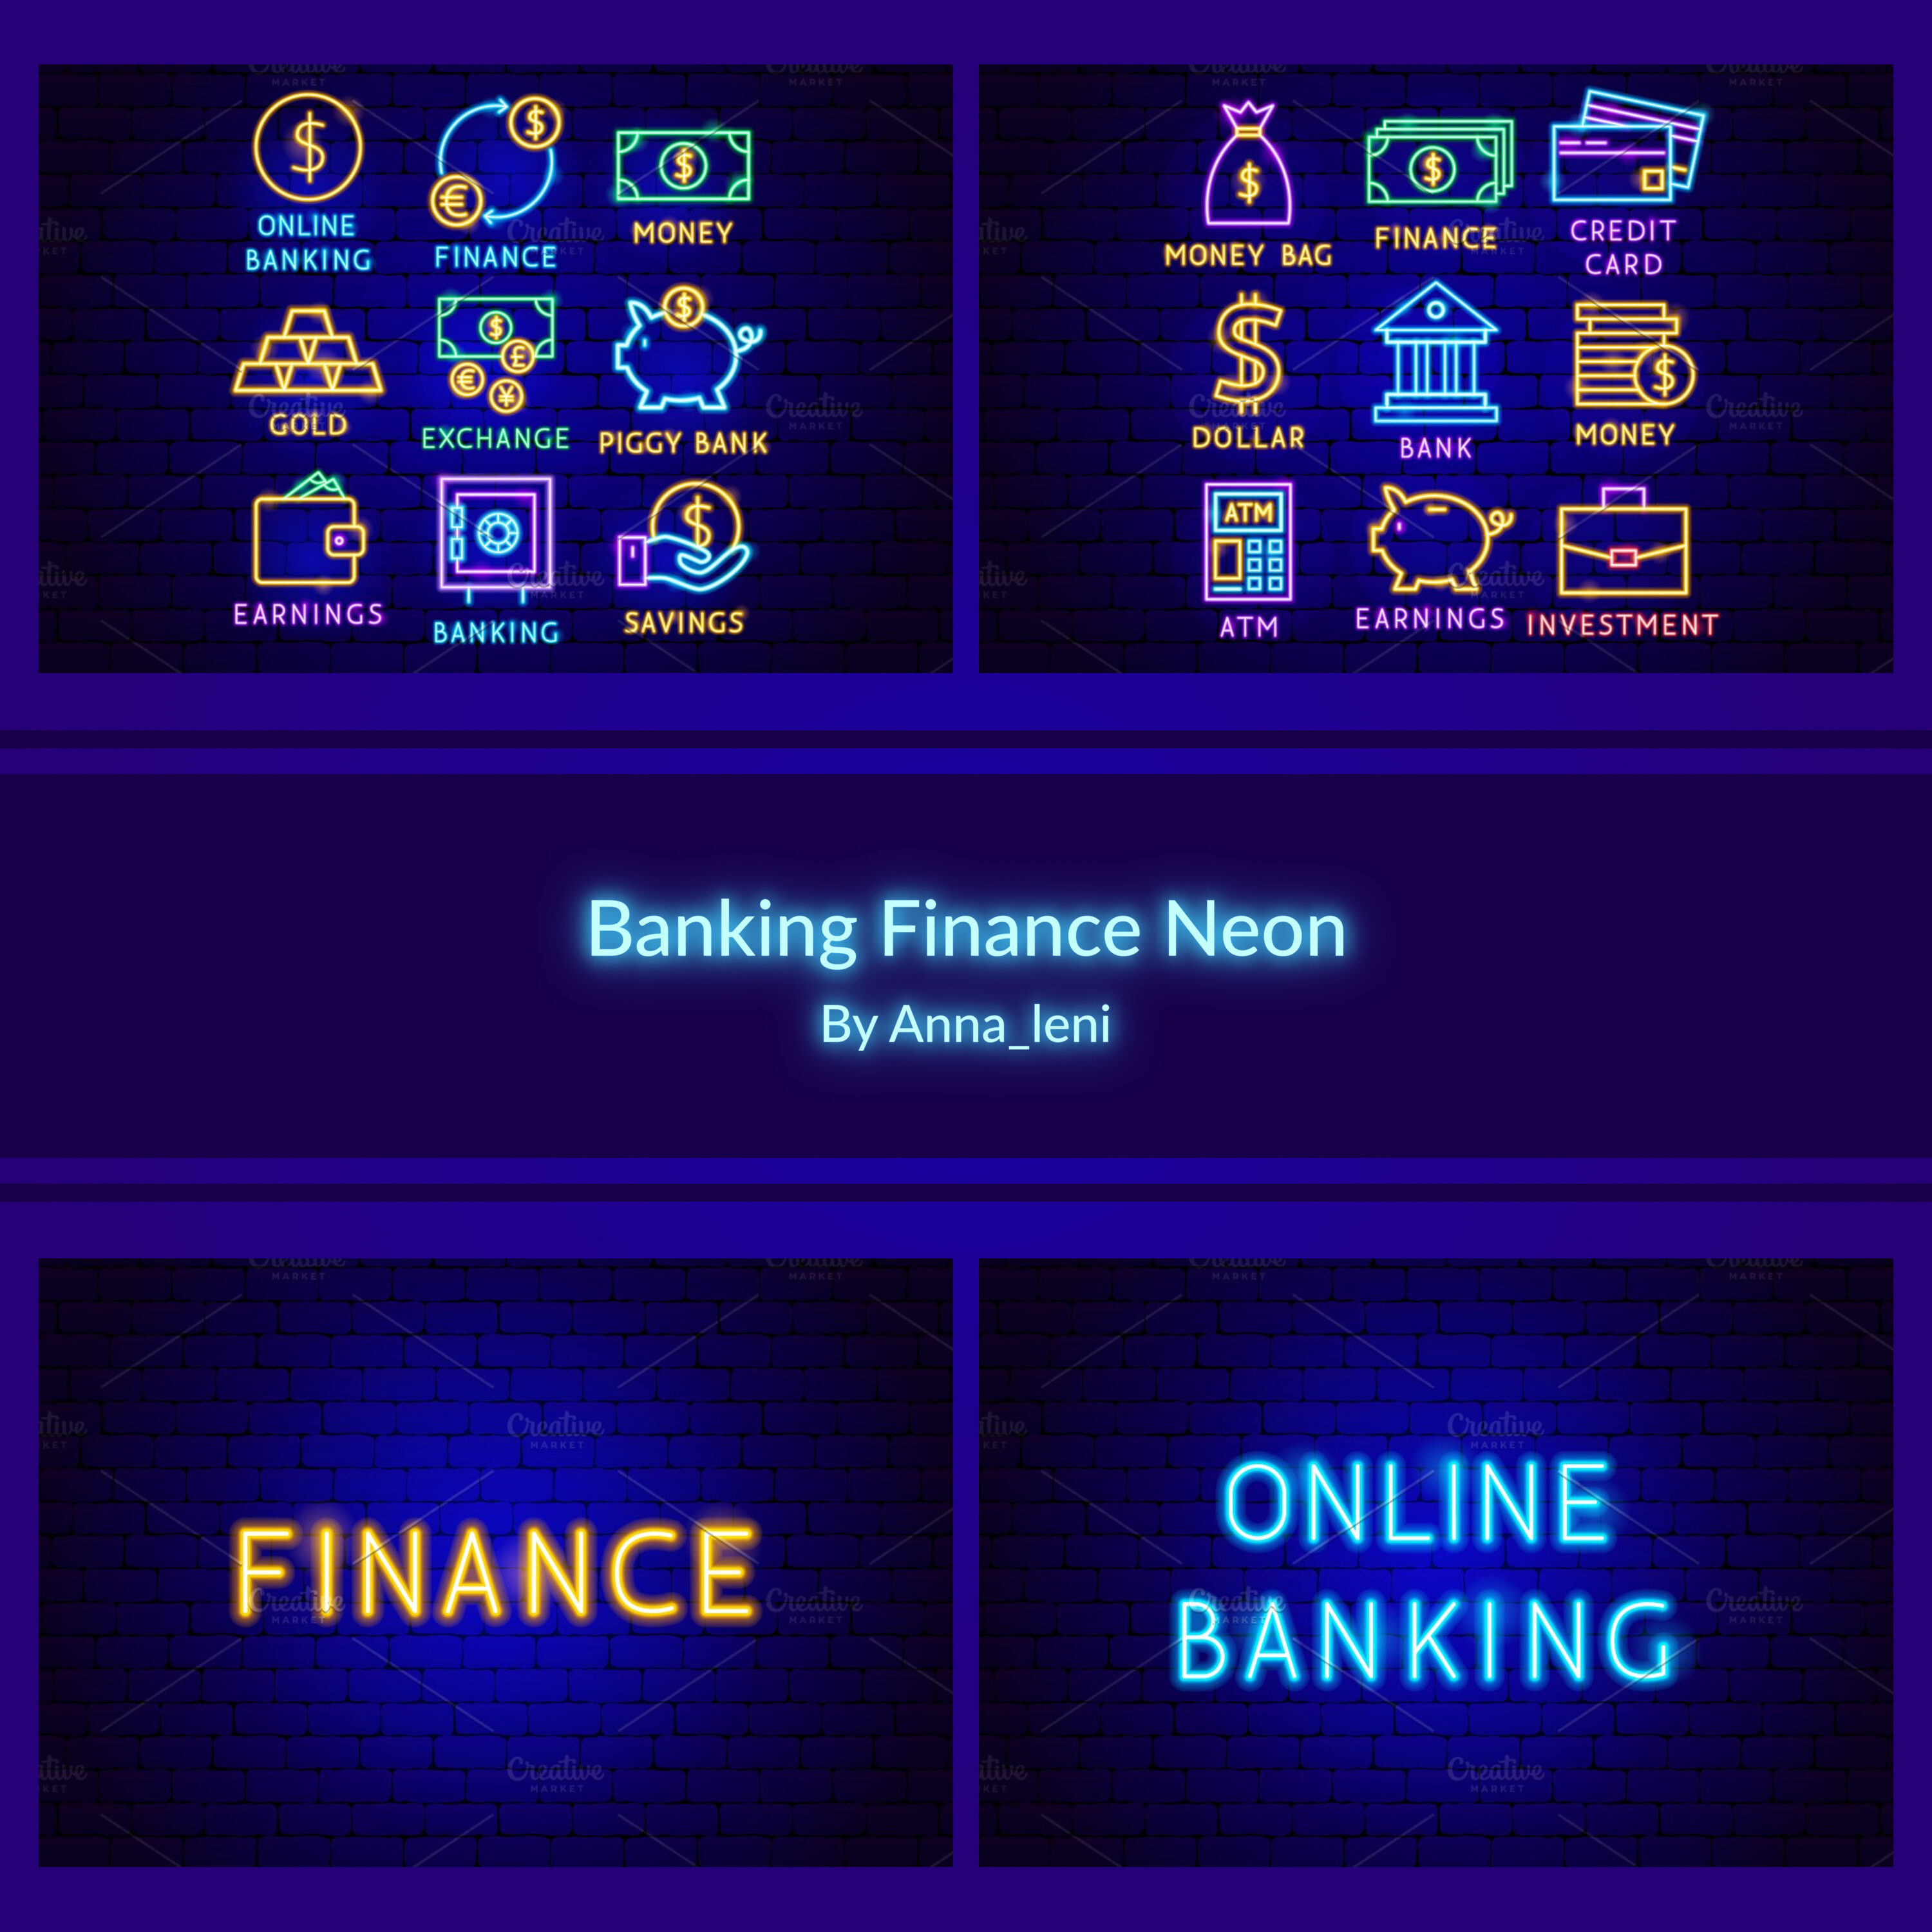 Prints of banking finance neon.